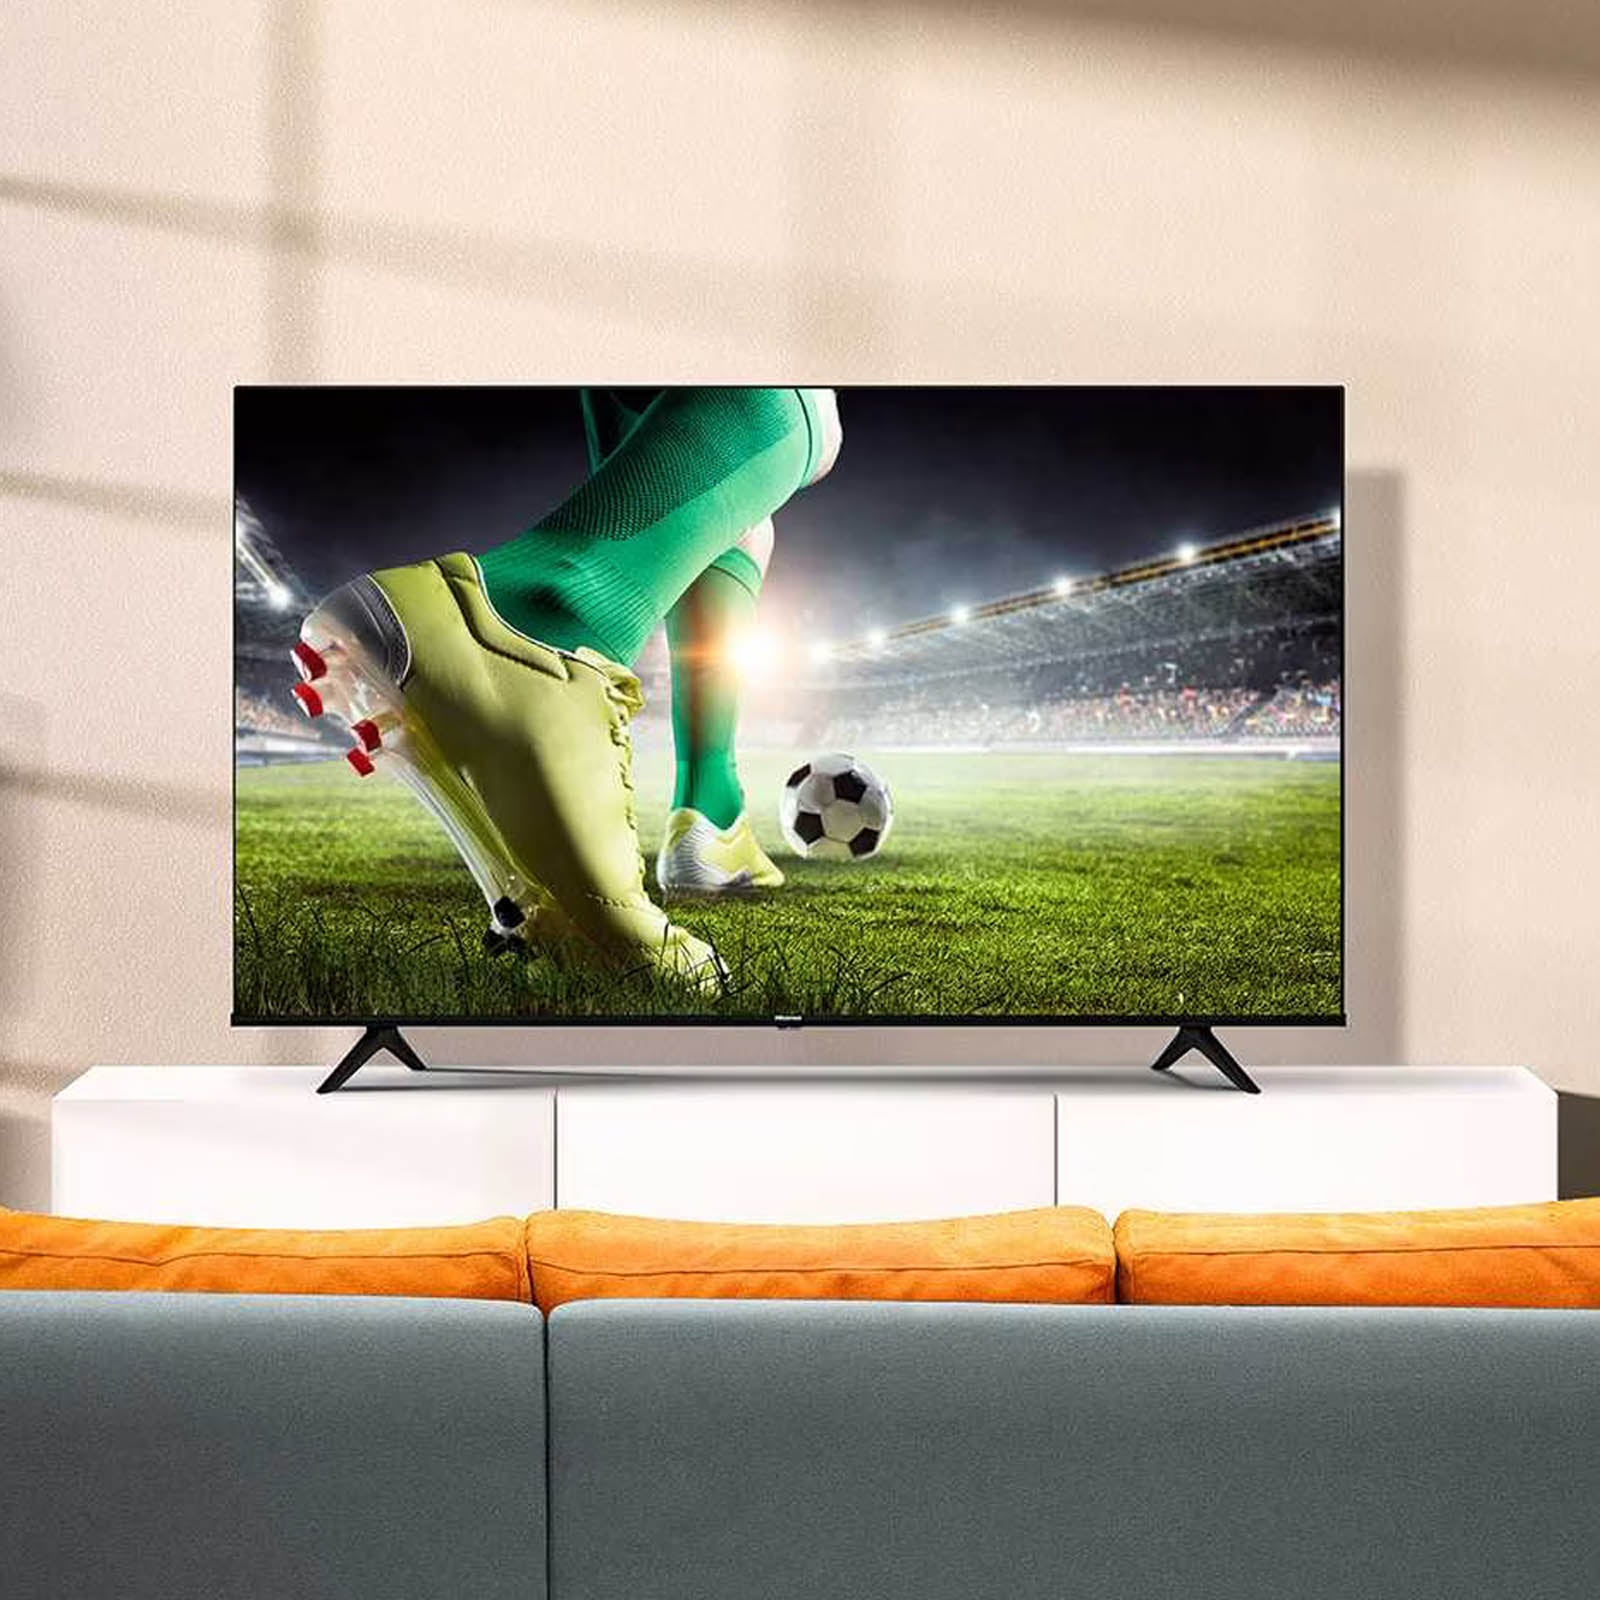 Smart Tv Hisense 55 Pulgadas Pantalla 4k Uled Roku Tv